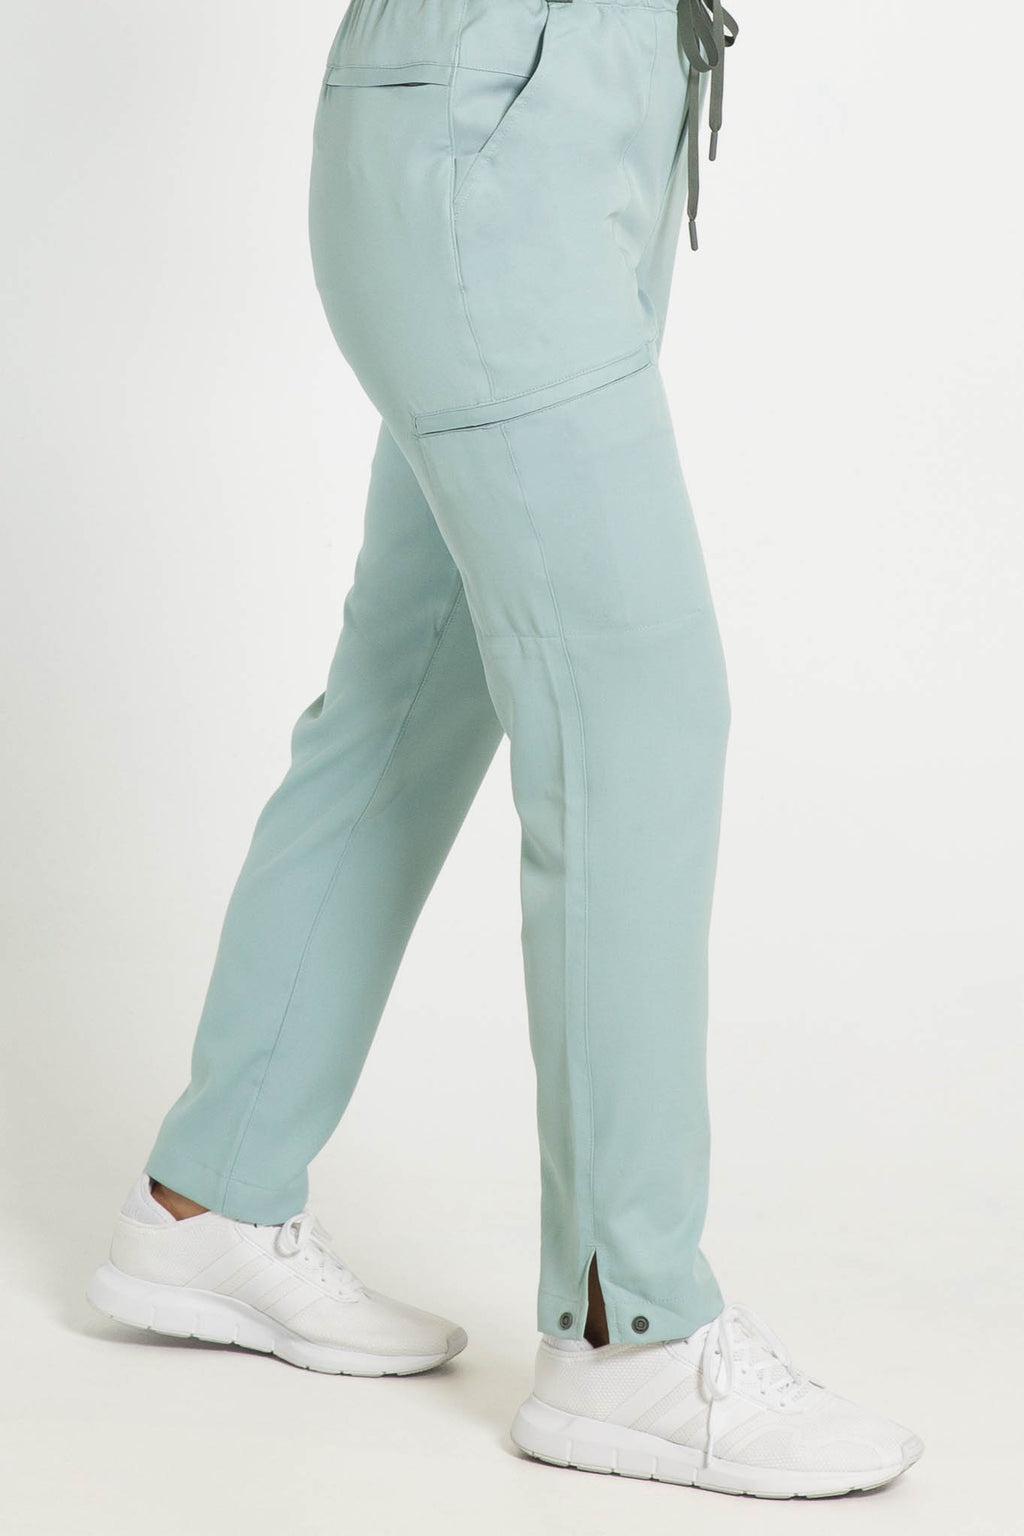 Petite Navy Pocket Detail Cargo Pants  Fashion pants, Pants for women,  Nurse outfit scrubs